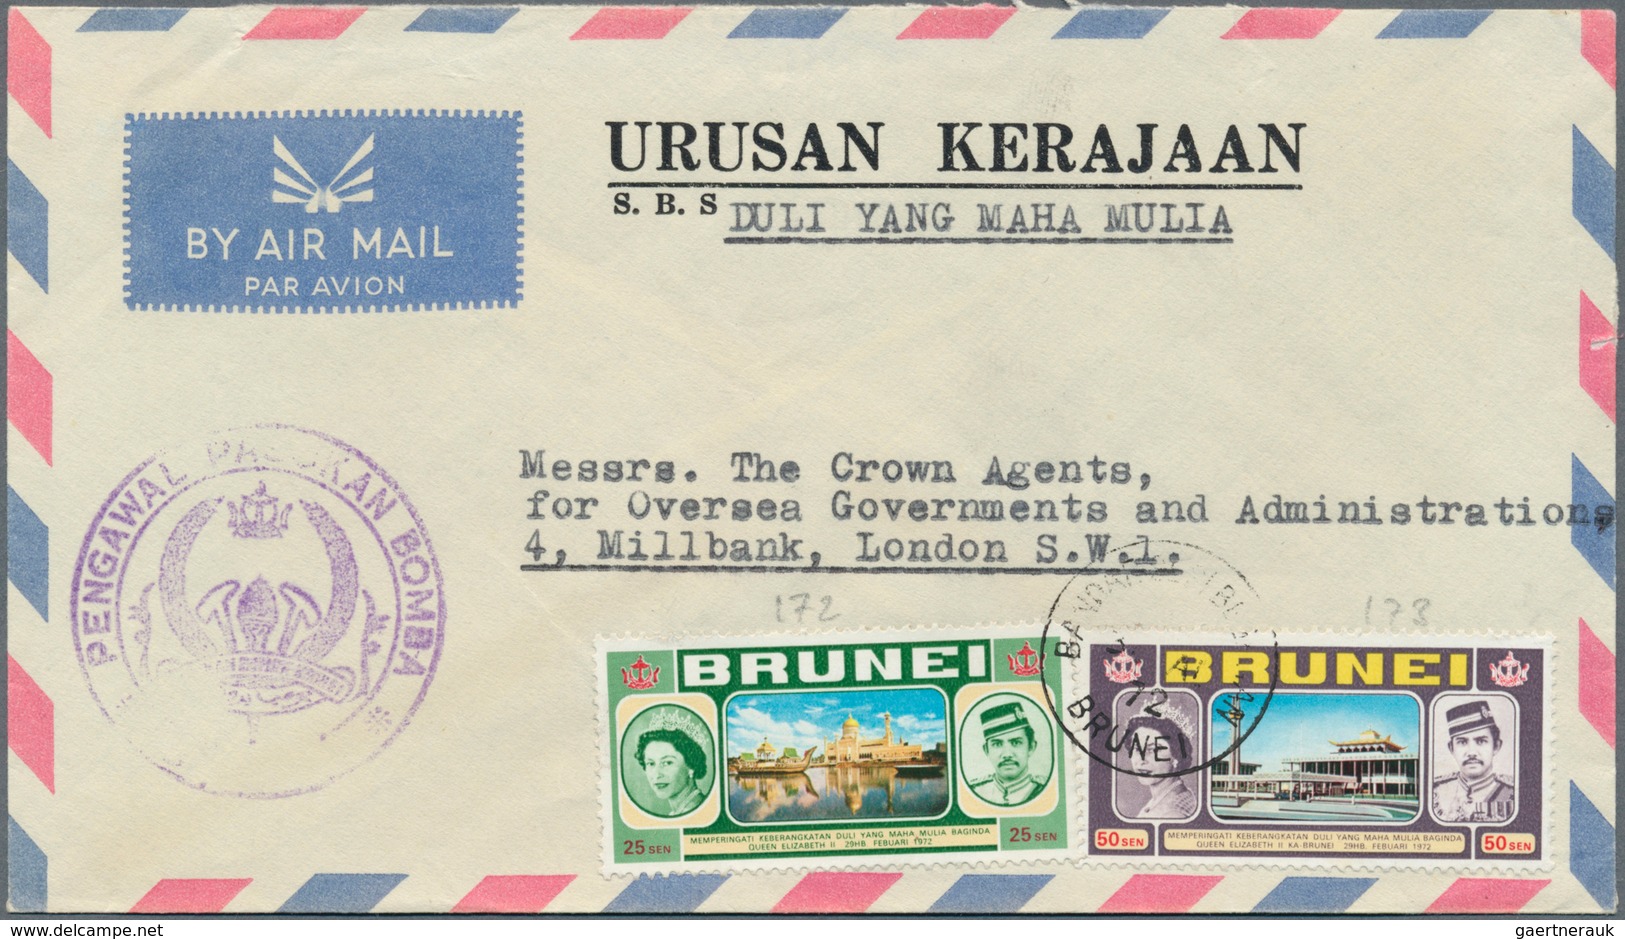 Malaiische Staaten: 1893/1999, Malaysian states/Straits Settlements/Brunei, assortment of 31 covers/